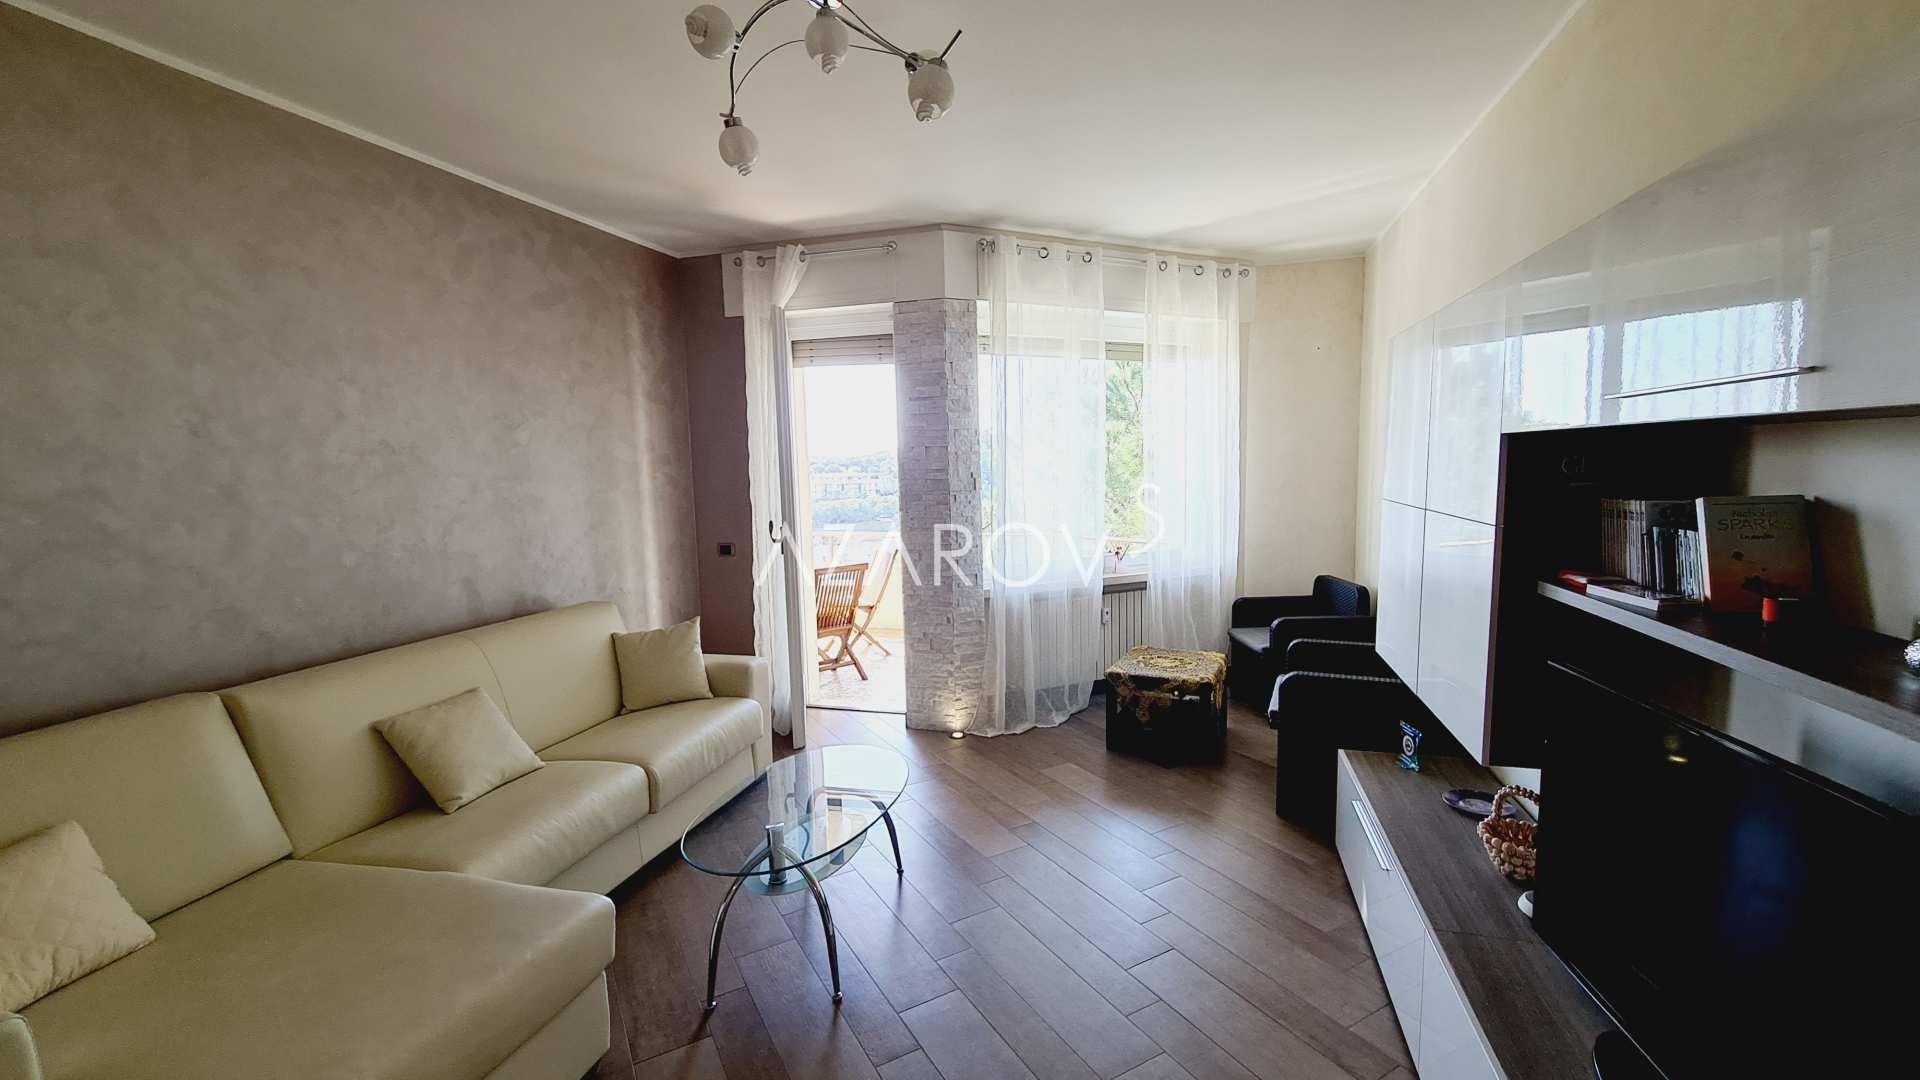 100 m2 Wohnung in Sanremo